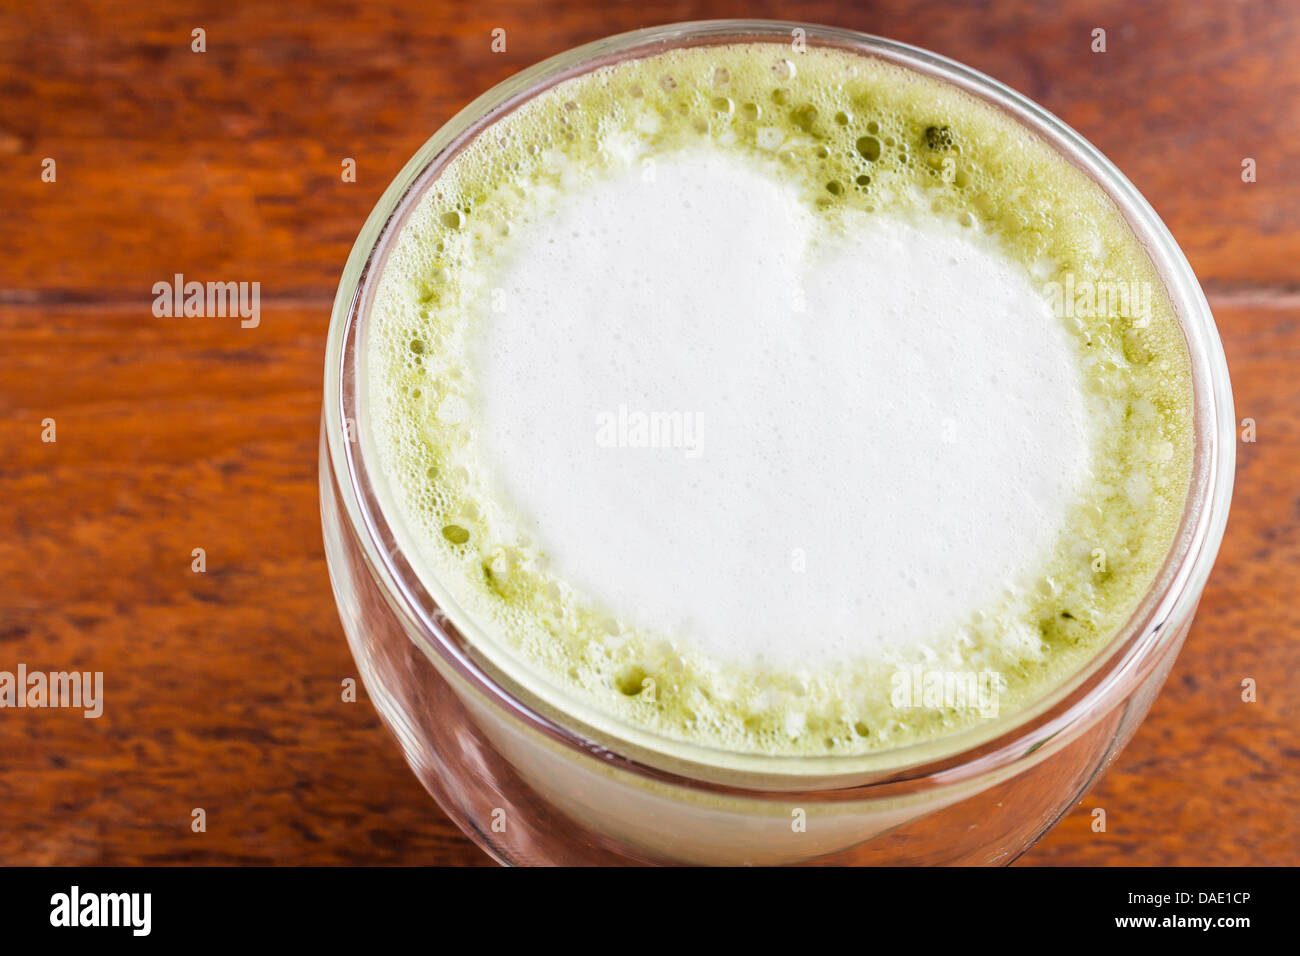 Matcha green tea latte serving on wood table Stock Photo